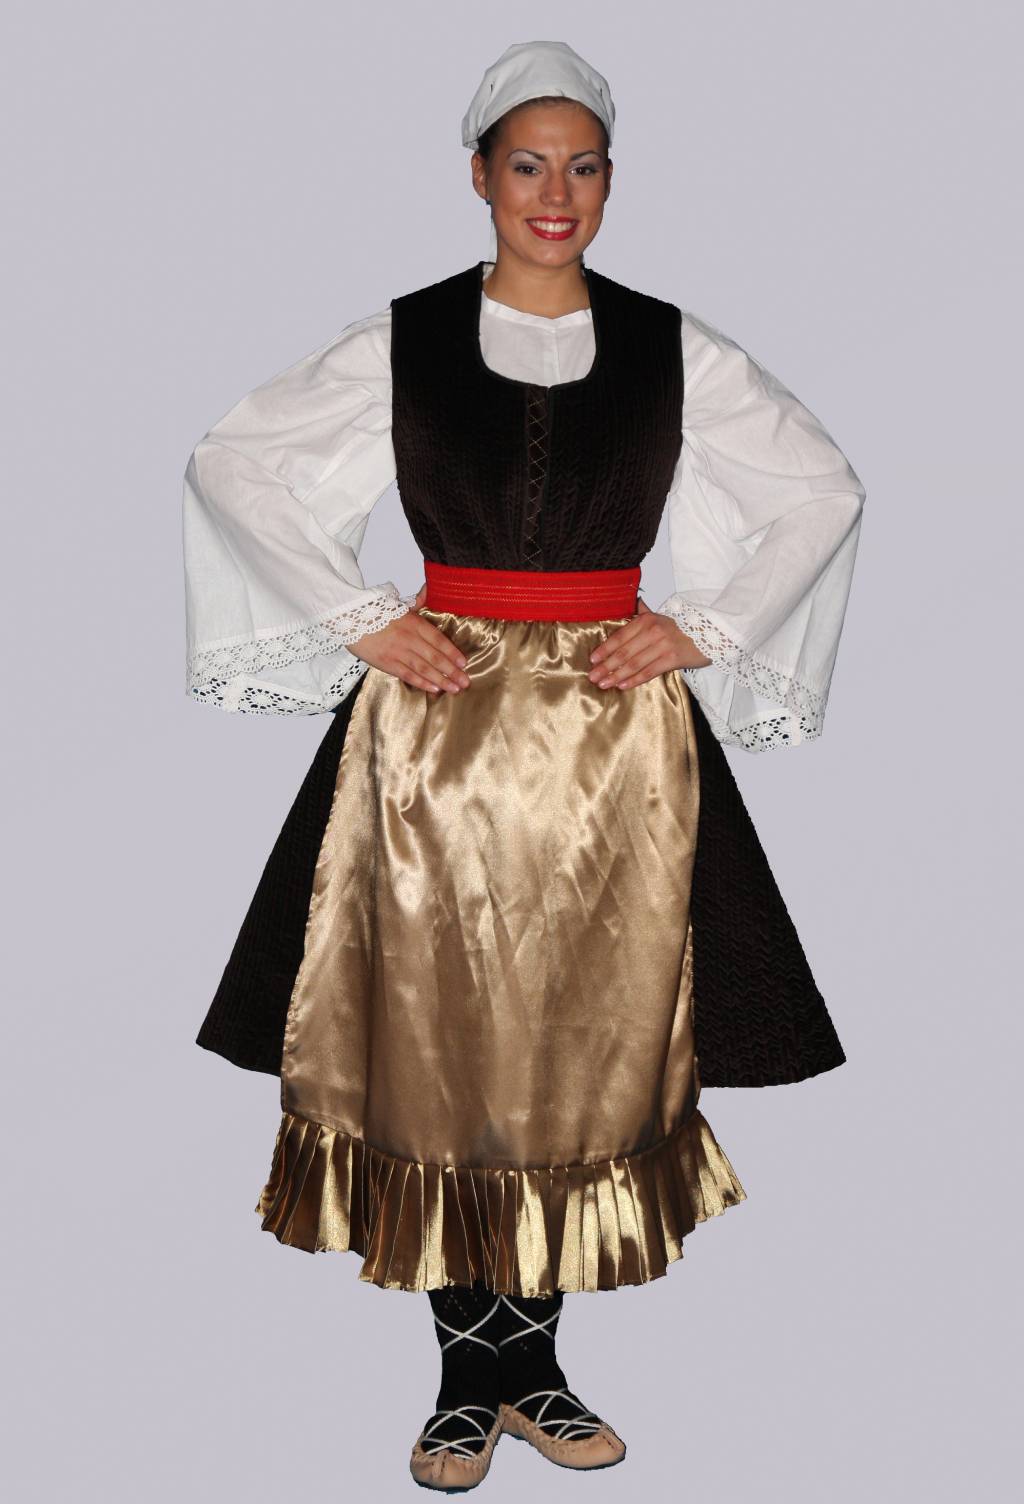 National costume from Bela Palanka